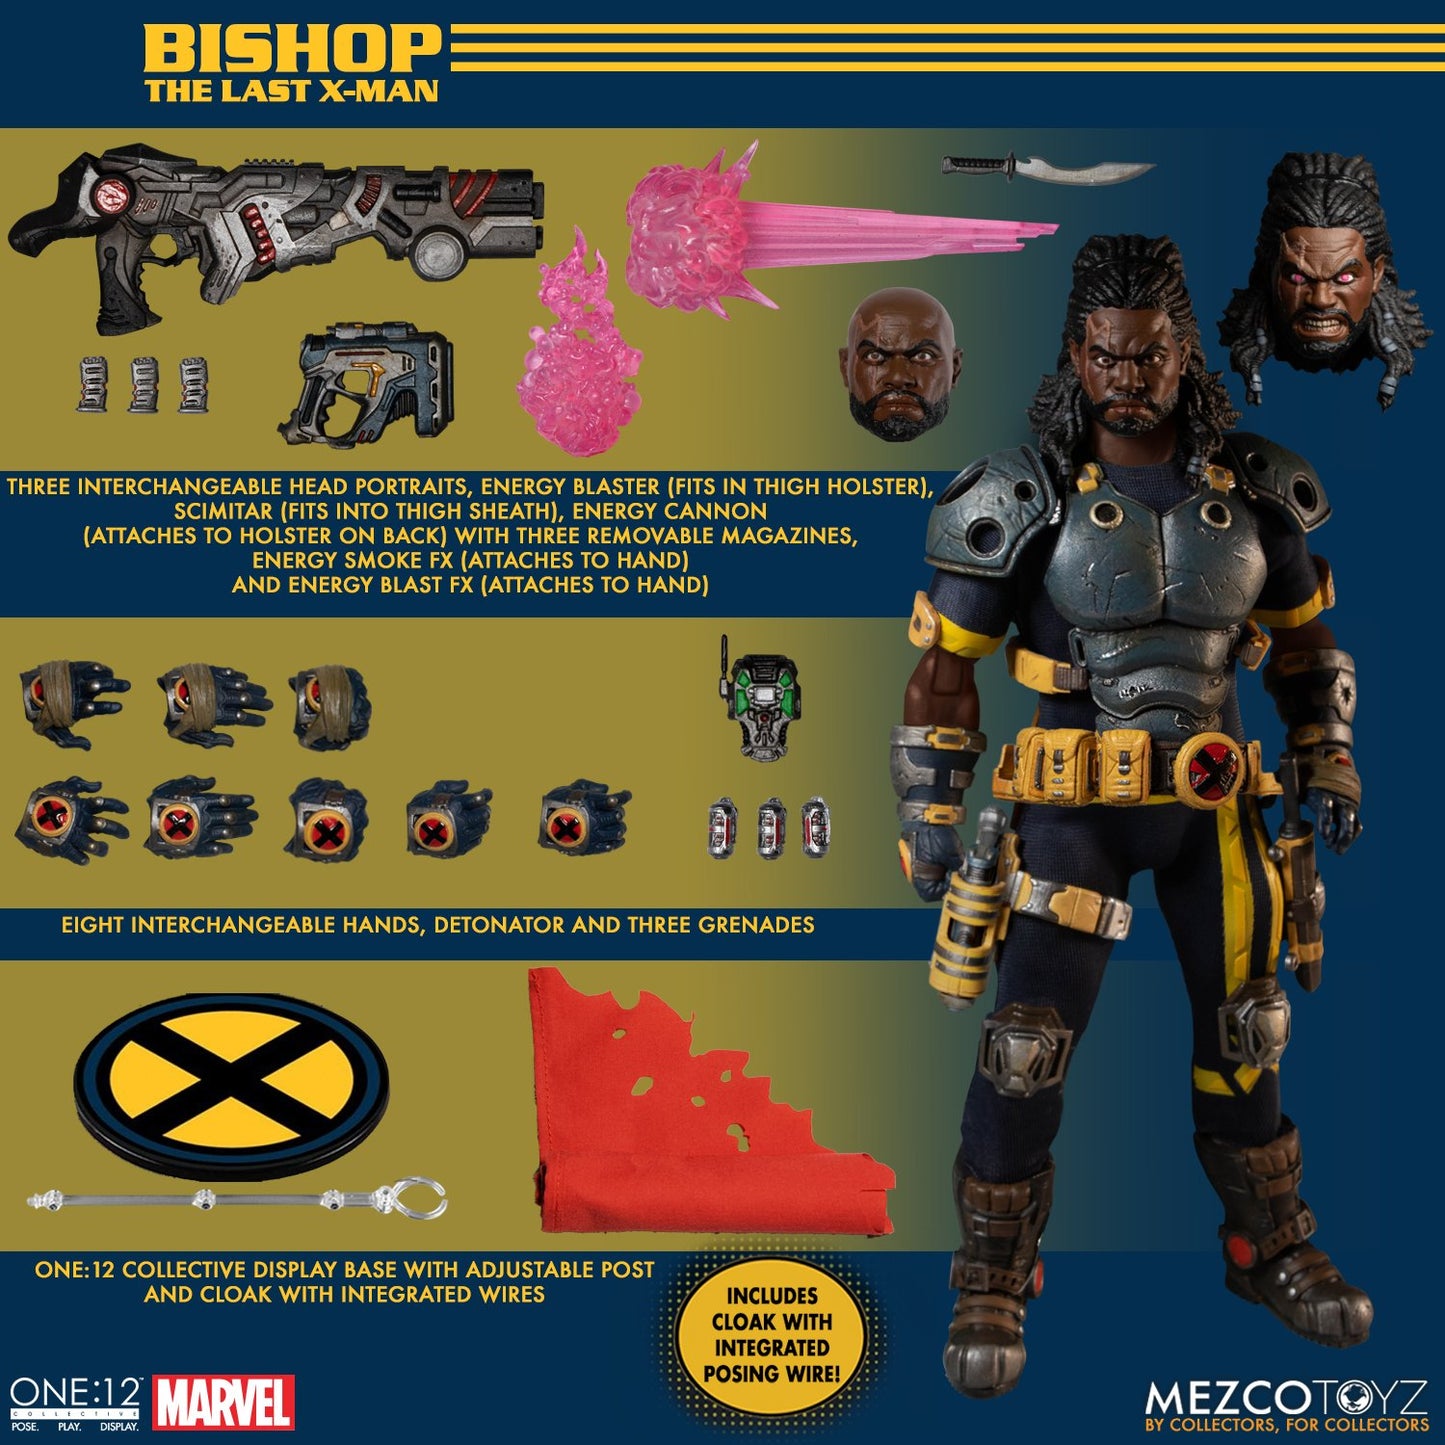 BISHOP THE LAST X-MAN MEZCO ONE:12